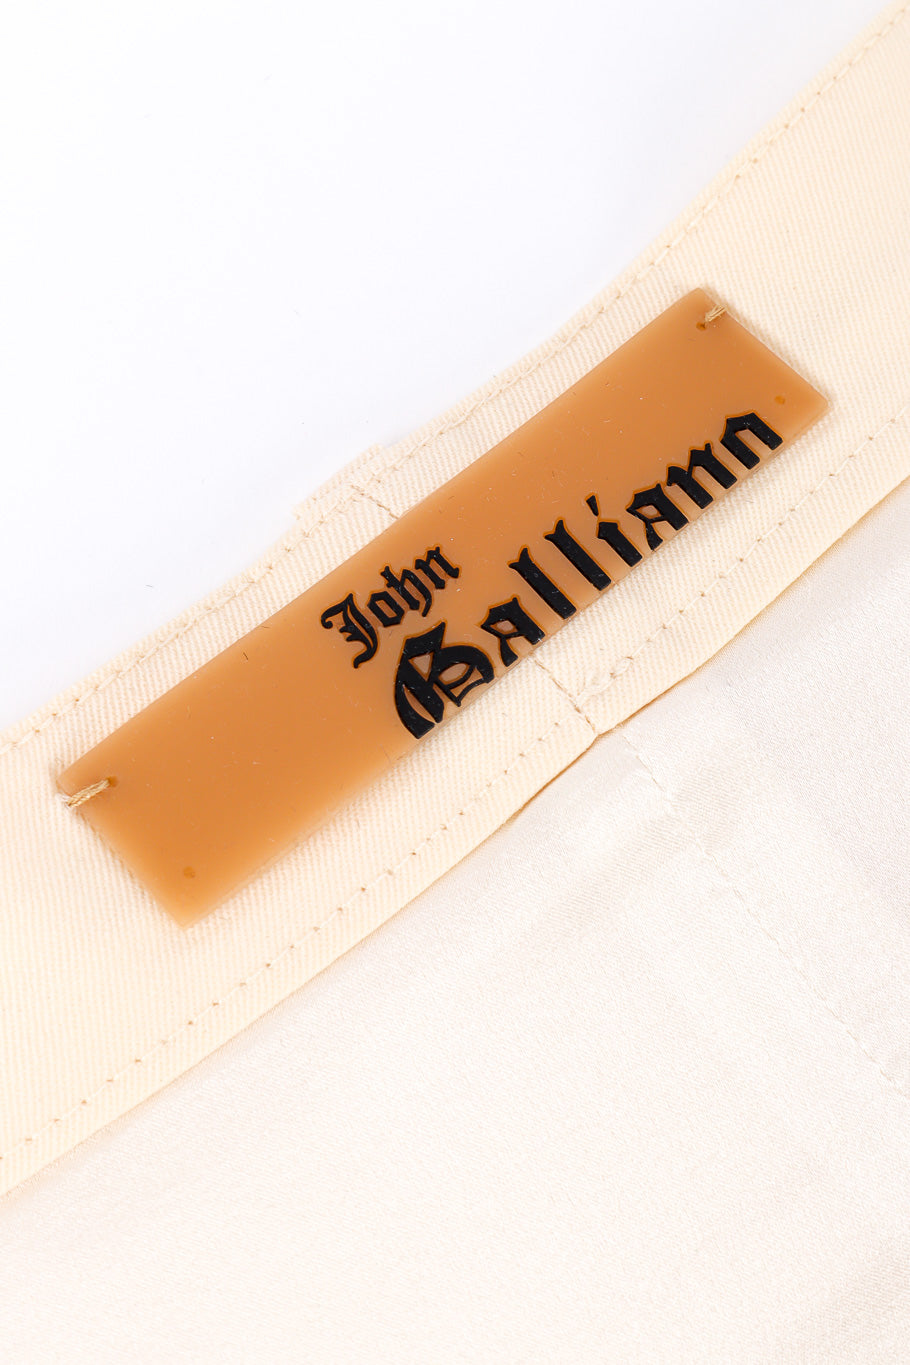 Skirt suit by John Galliano flat lay skirt label @recessla